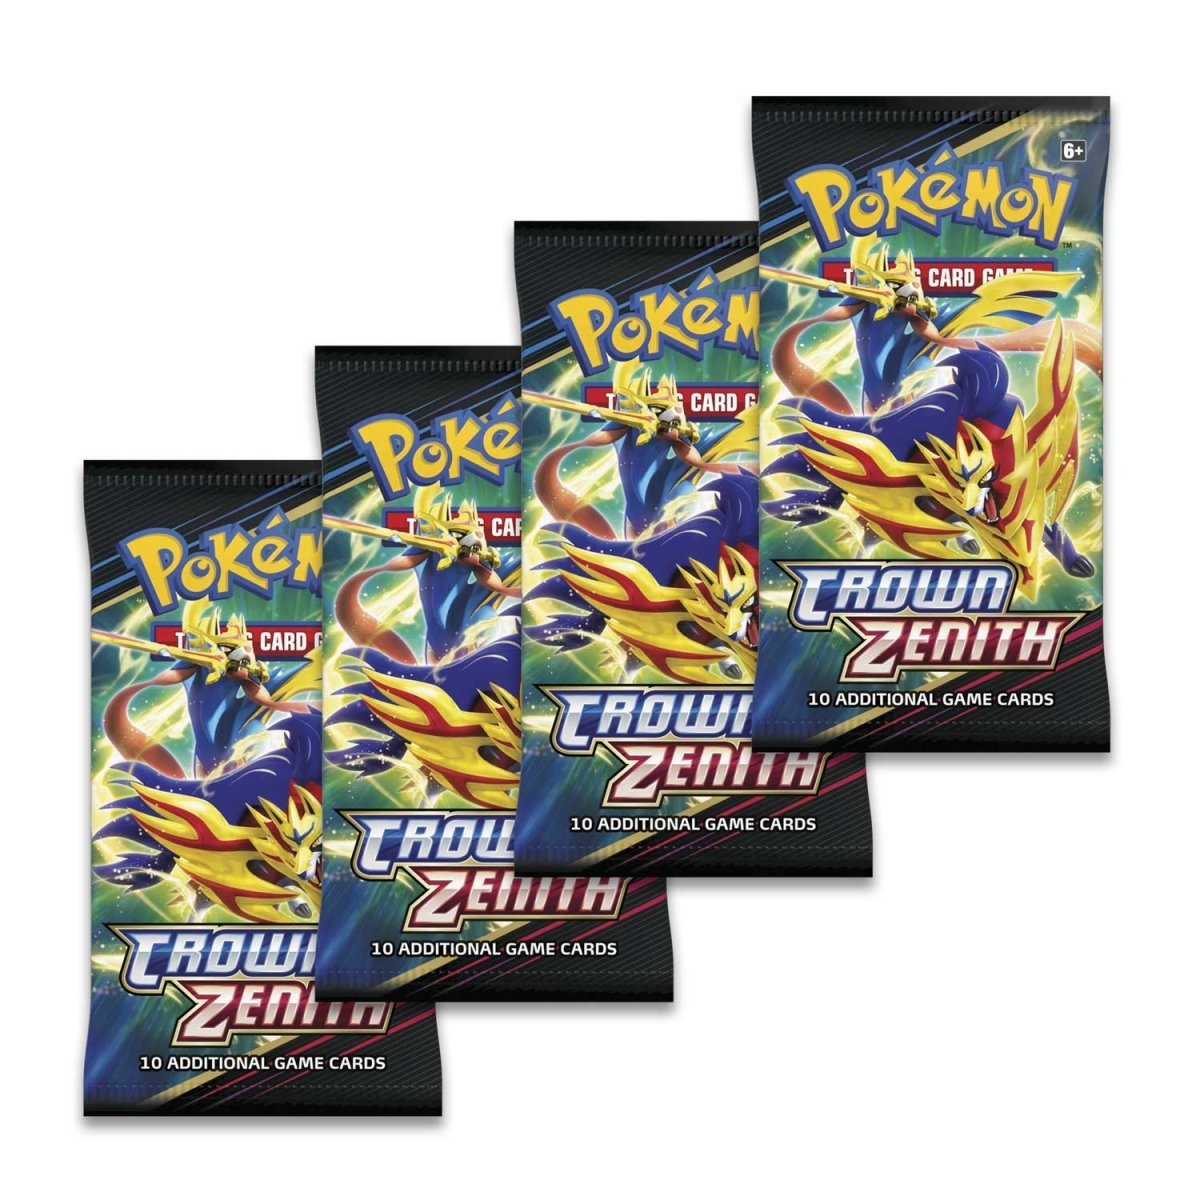 Pokémon TCG: Crown Zenith Regieleki V Collection Box - PokeRvmCollection Box